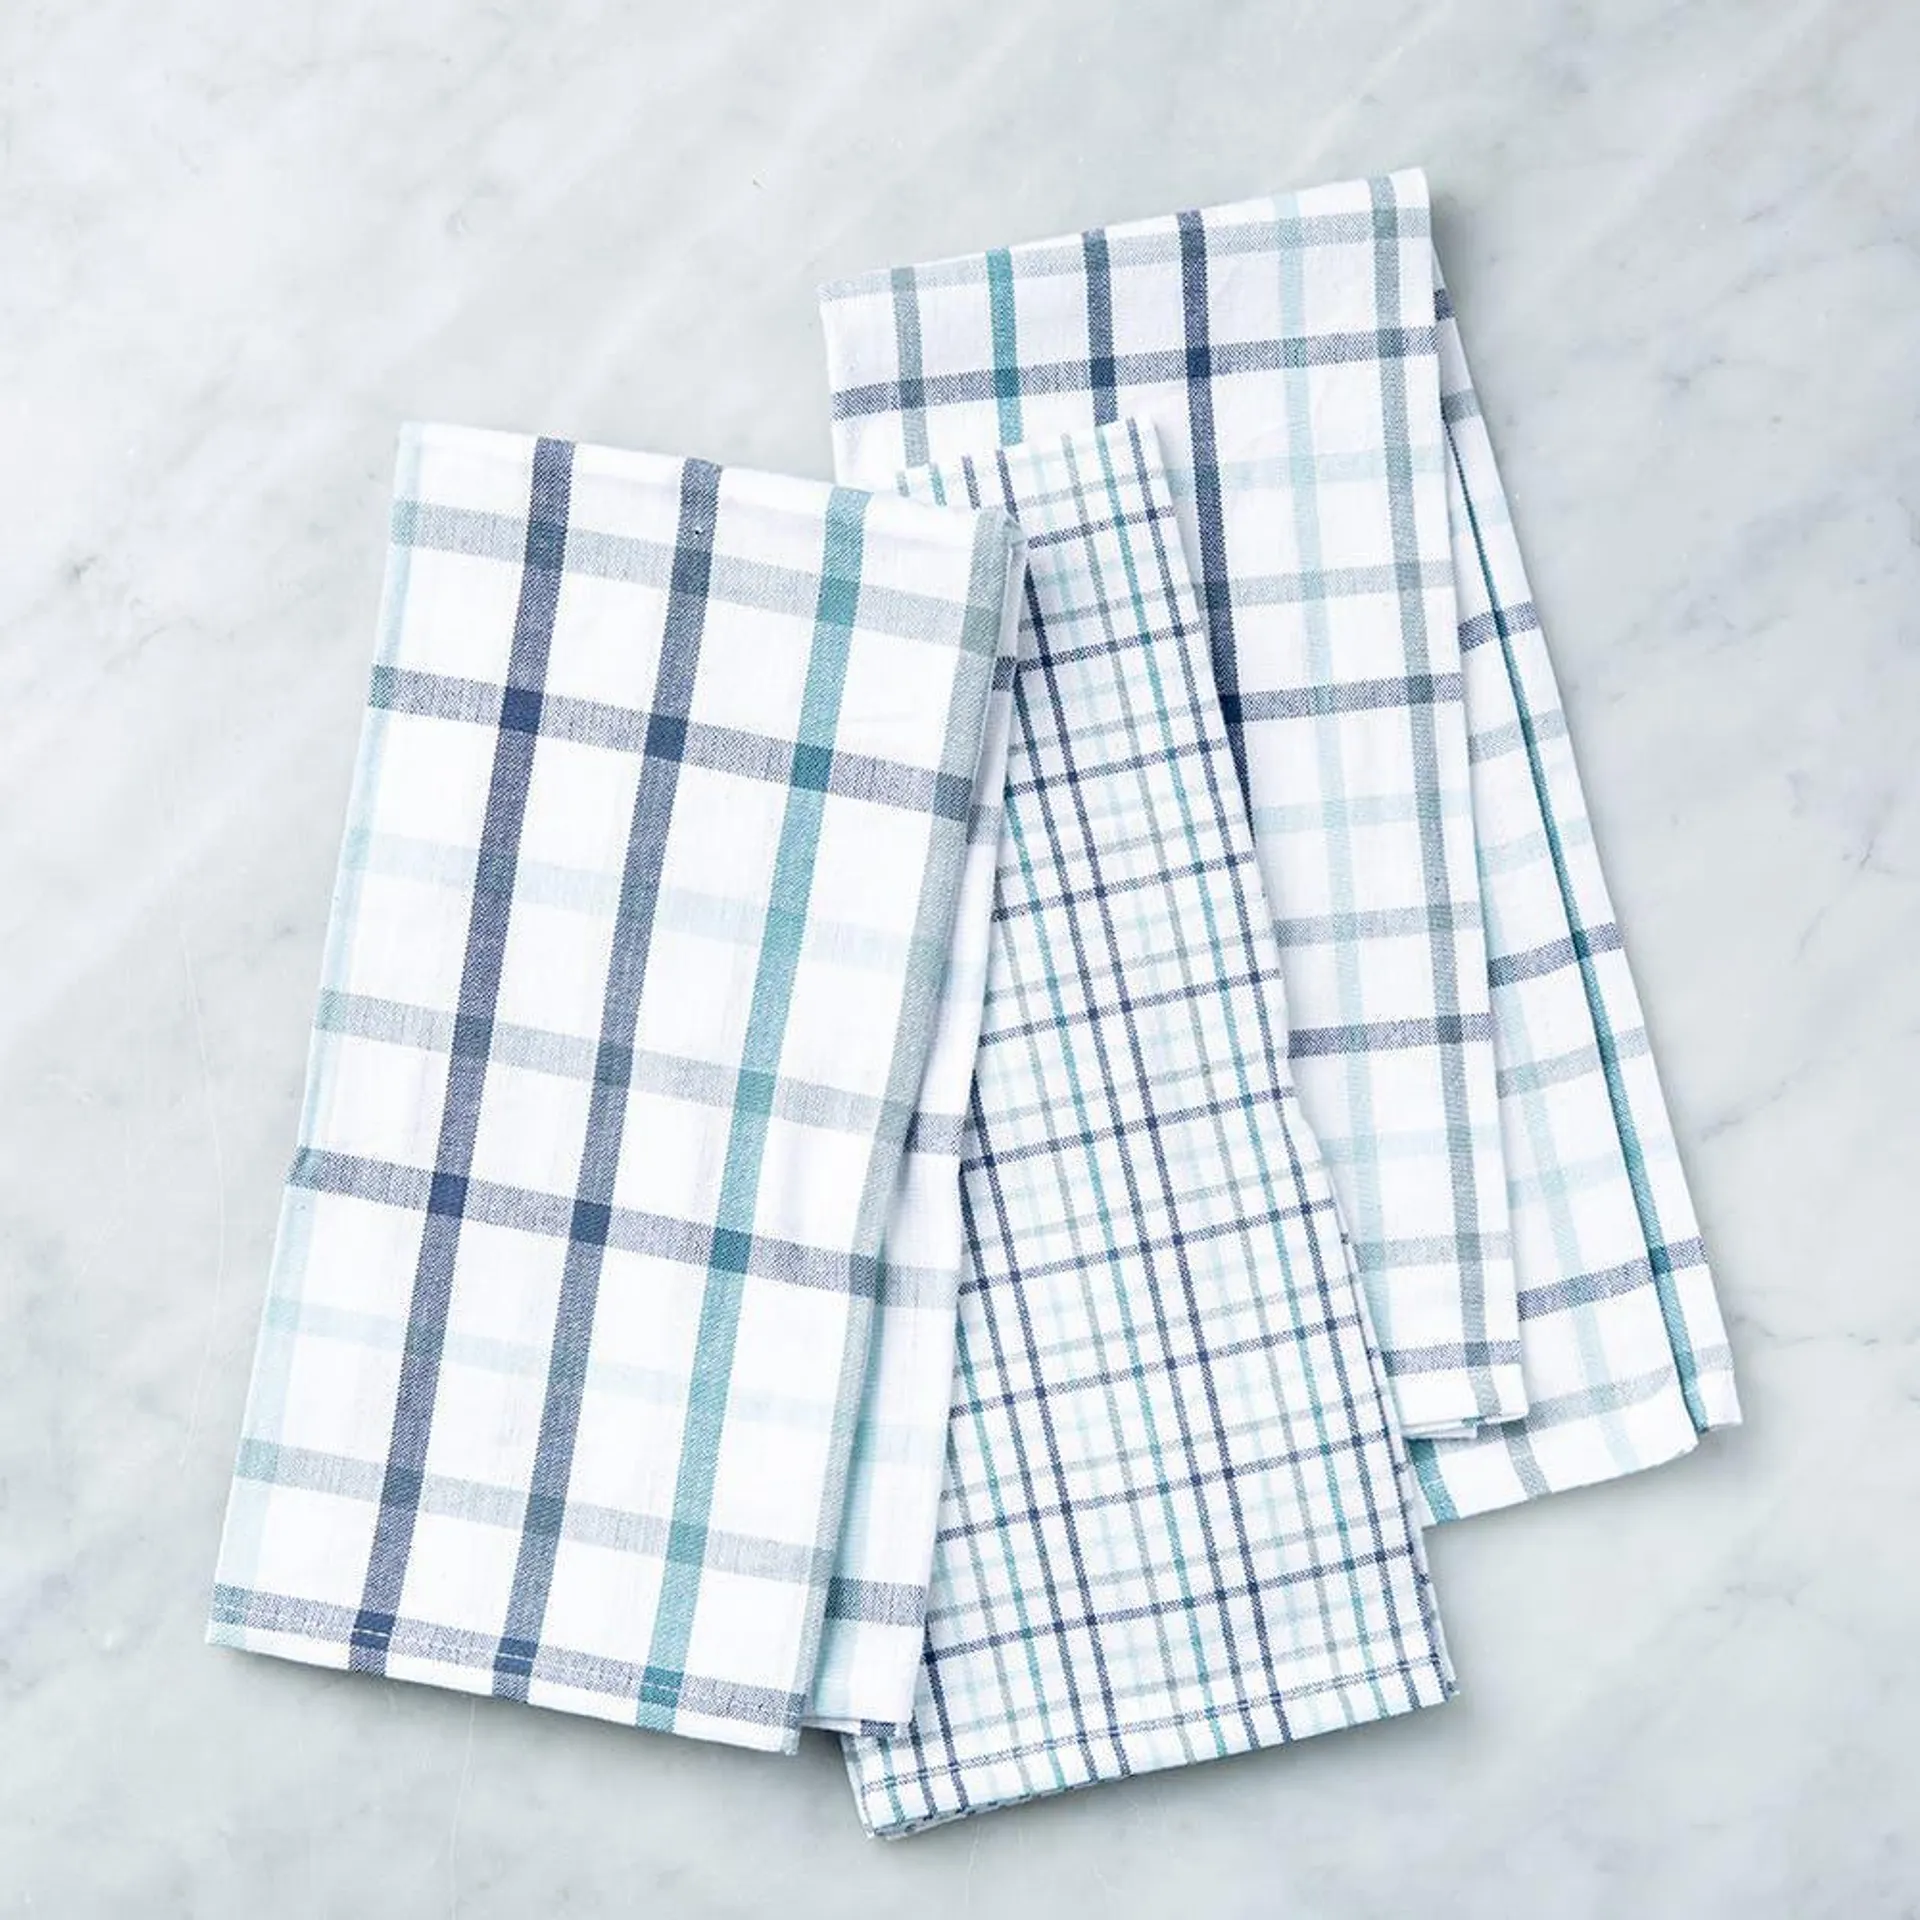 Harman Combo 'Catalina Check' Cotton Kitchen Towel - Set of 3 (Blue)